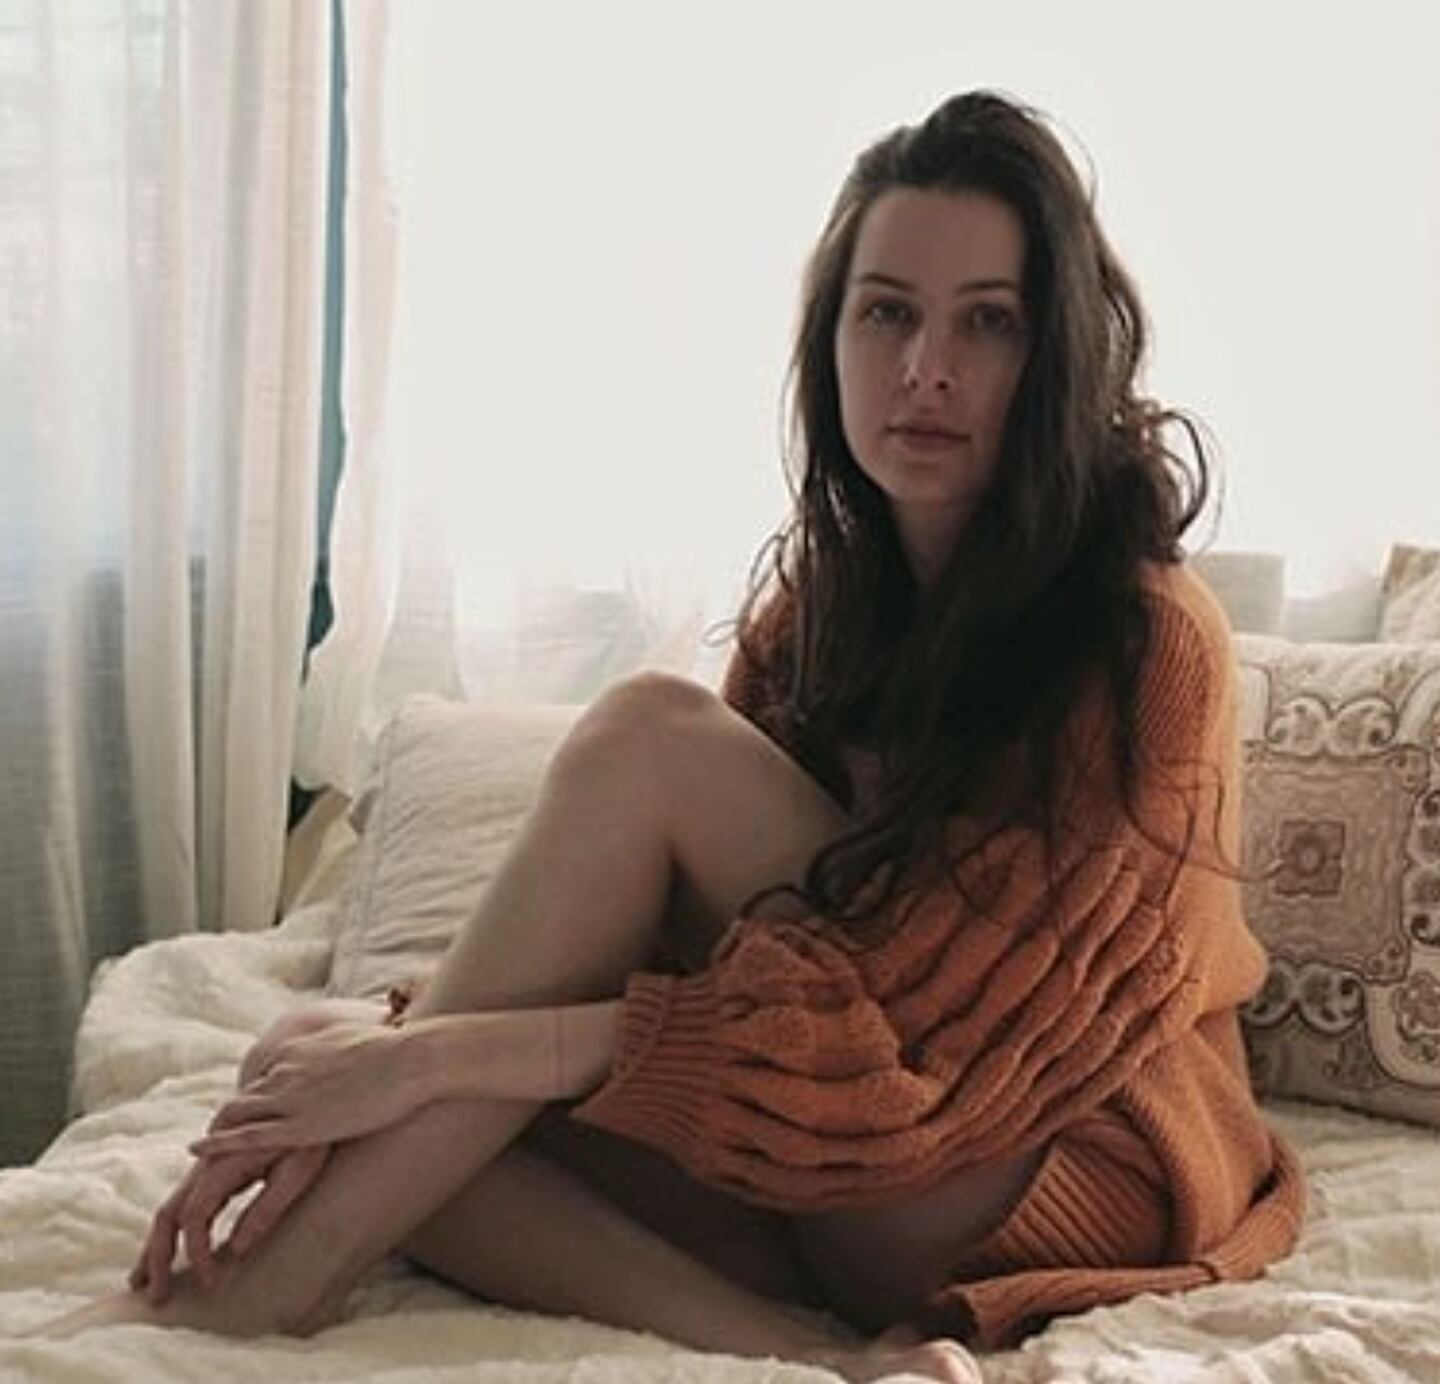 "Aella", modelo de OnlyFans. Imagen: captura de pantalla de Instagram